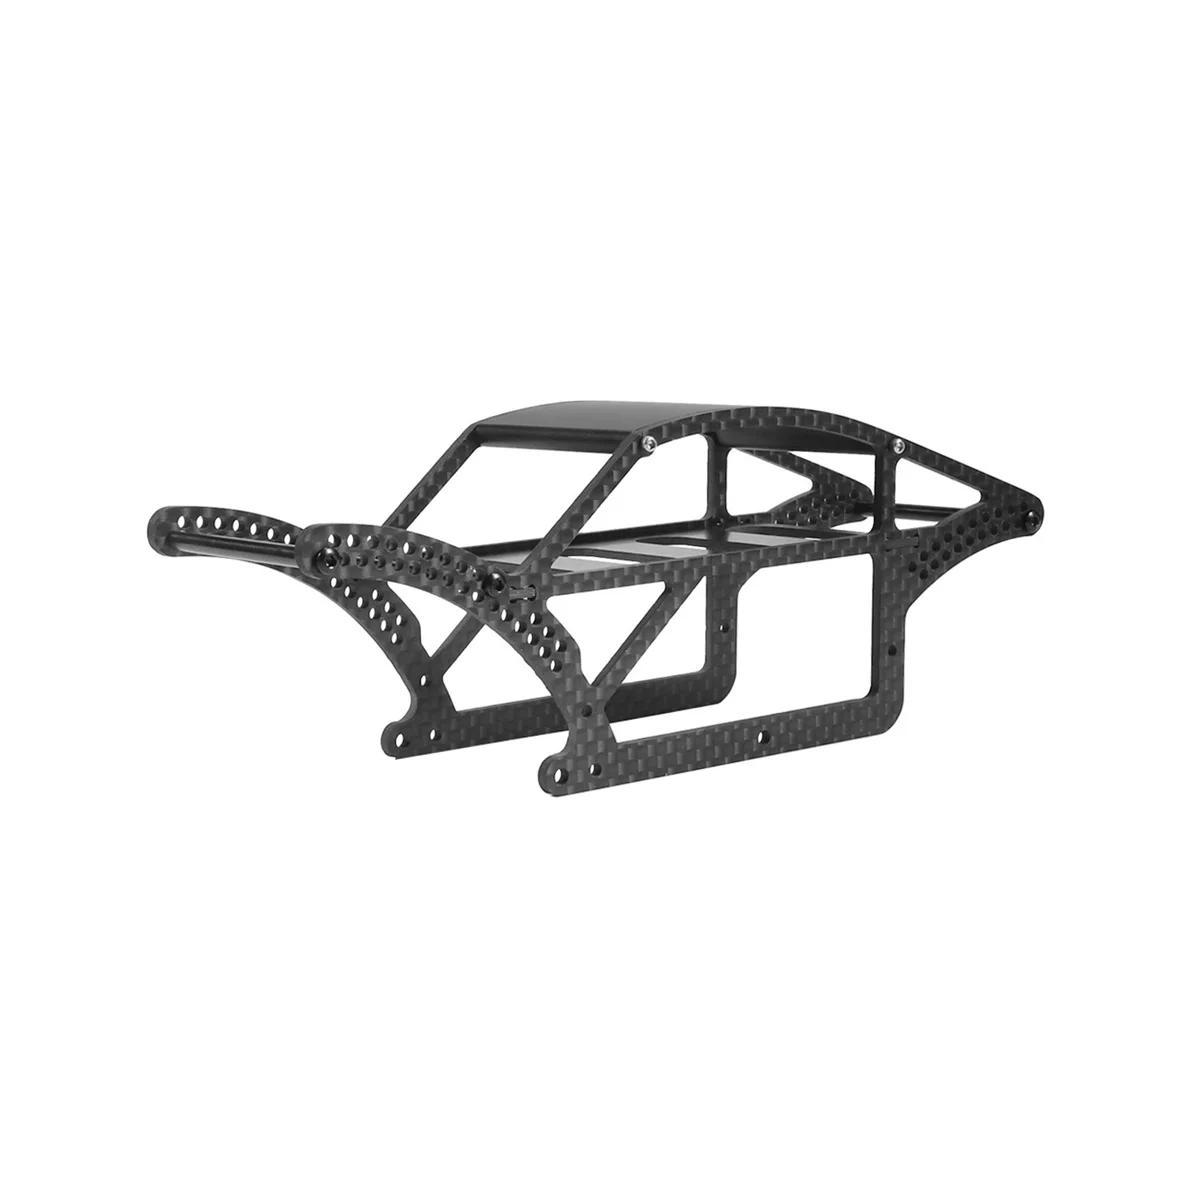 

Для TRX4M углеродное волокно Comp Ch is Frame Kit для 1/18 RC Rock Crawler Car TRX4-M обновленные детали